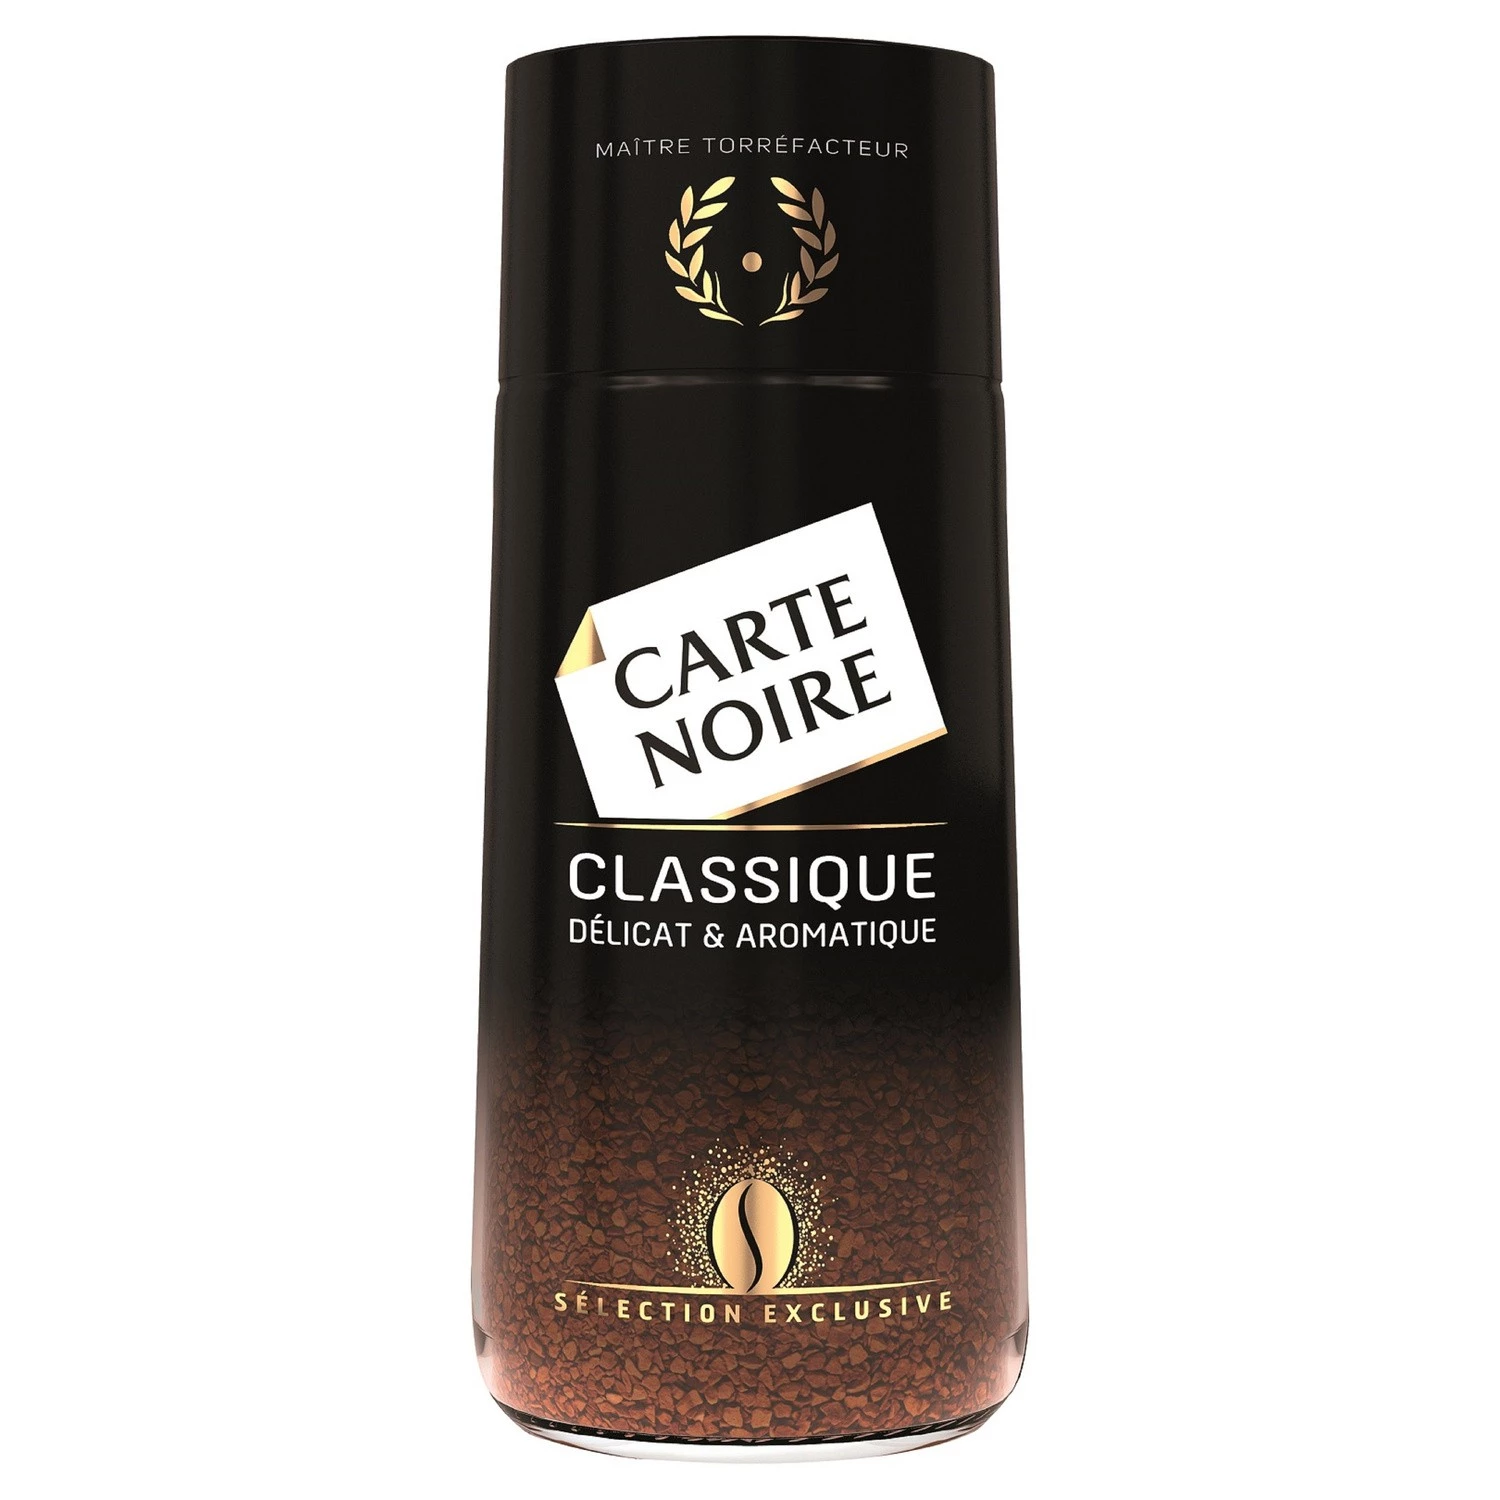 Classic instant coffee 100g - CARTE NOIRE